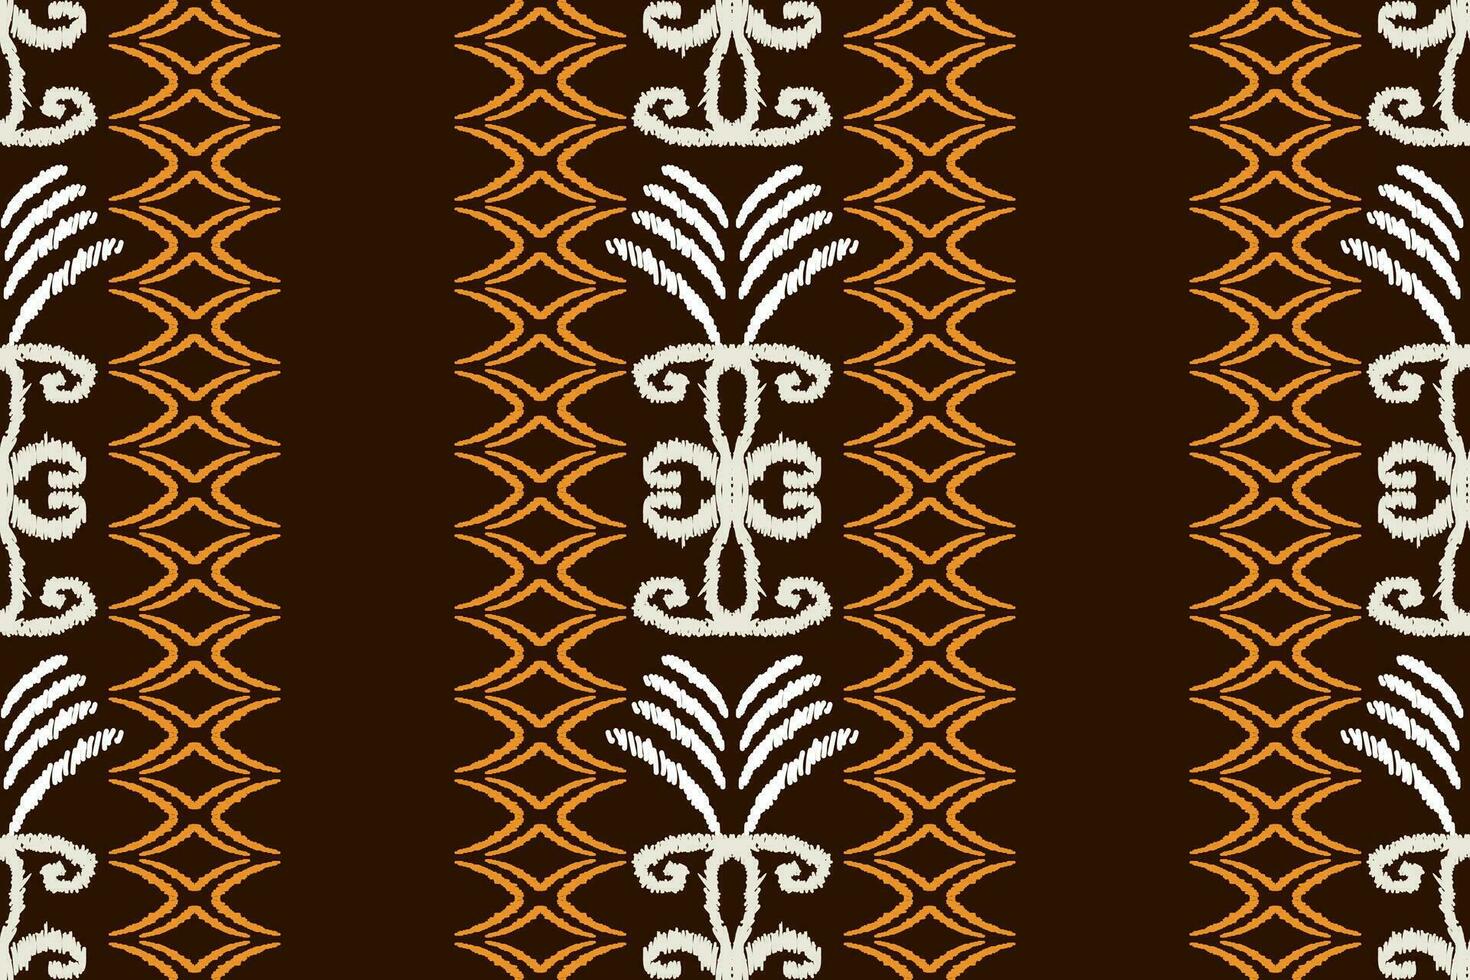 abstrakt ikat stam- bakgrund stam- sömlös mönster mexikansk stil tyg tapet design vektor illustration tyg Kläder matta textil- batik broderi